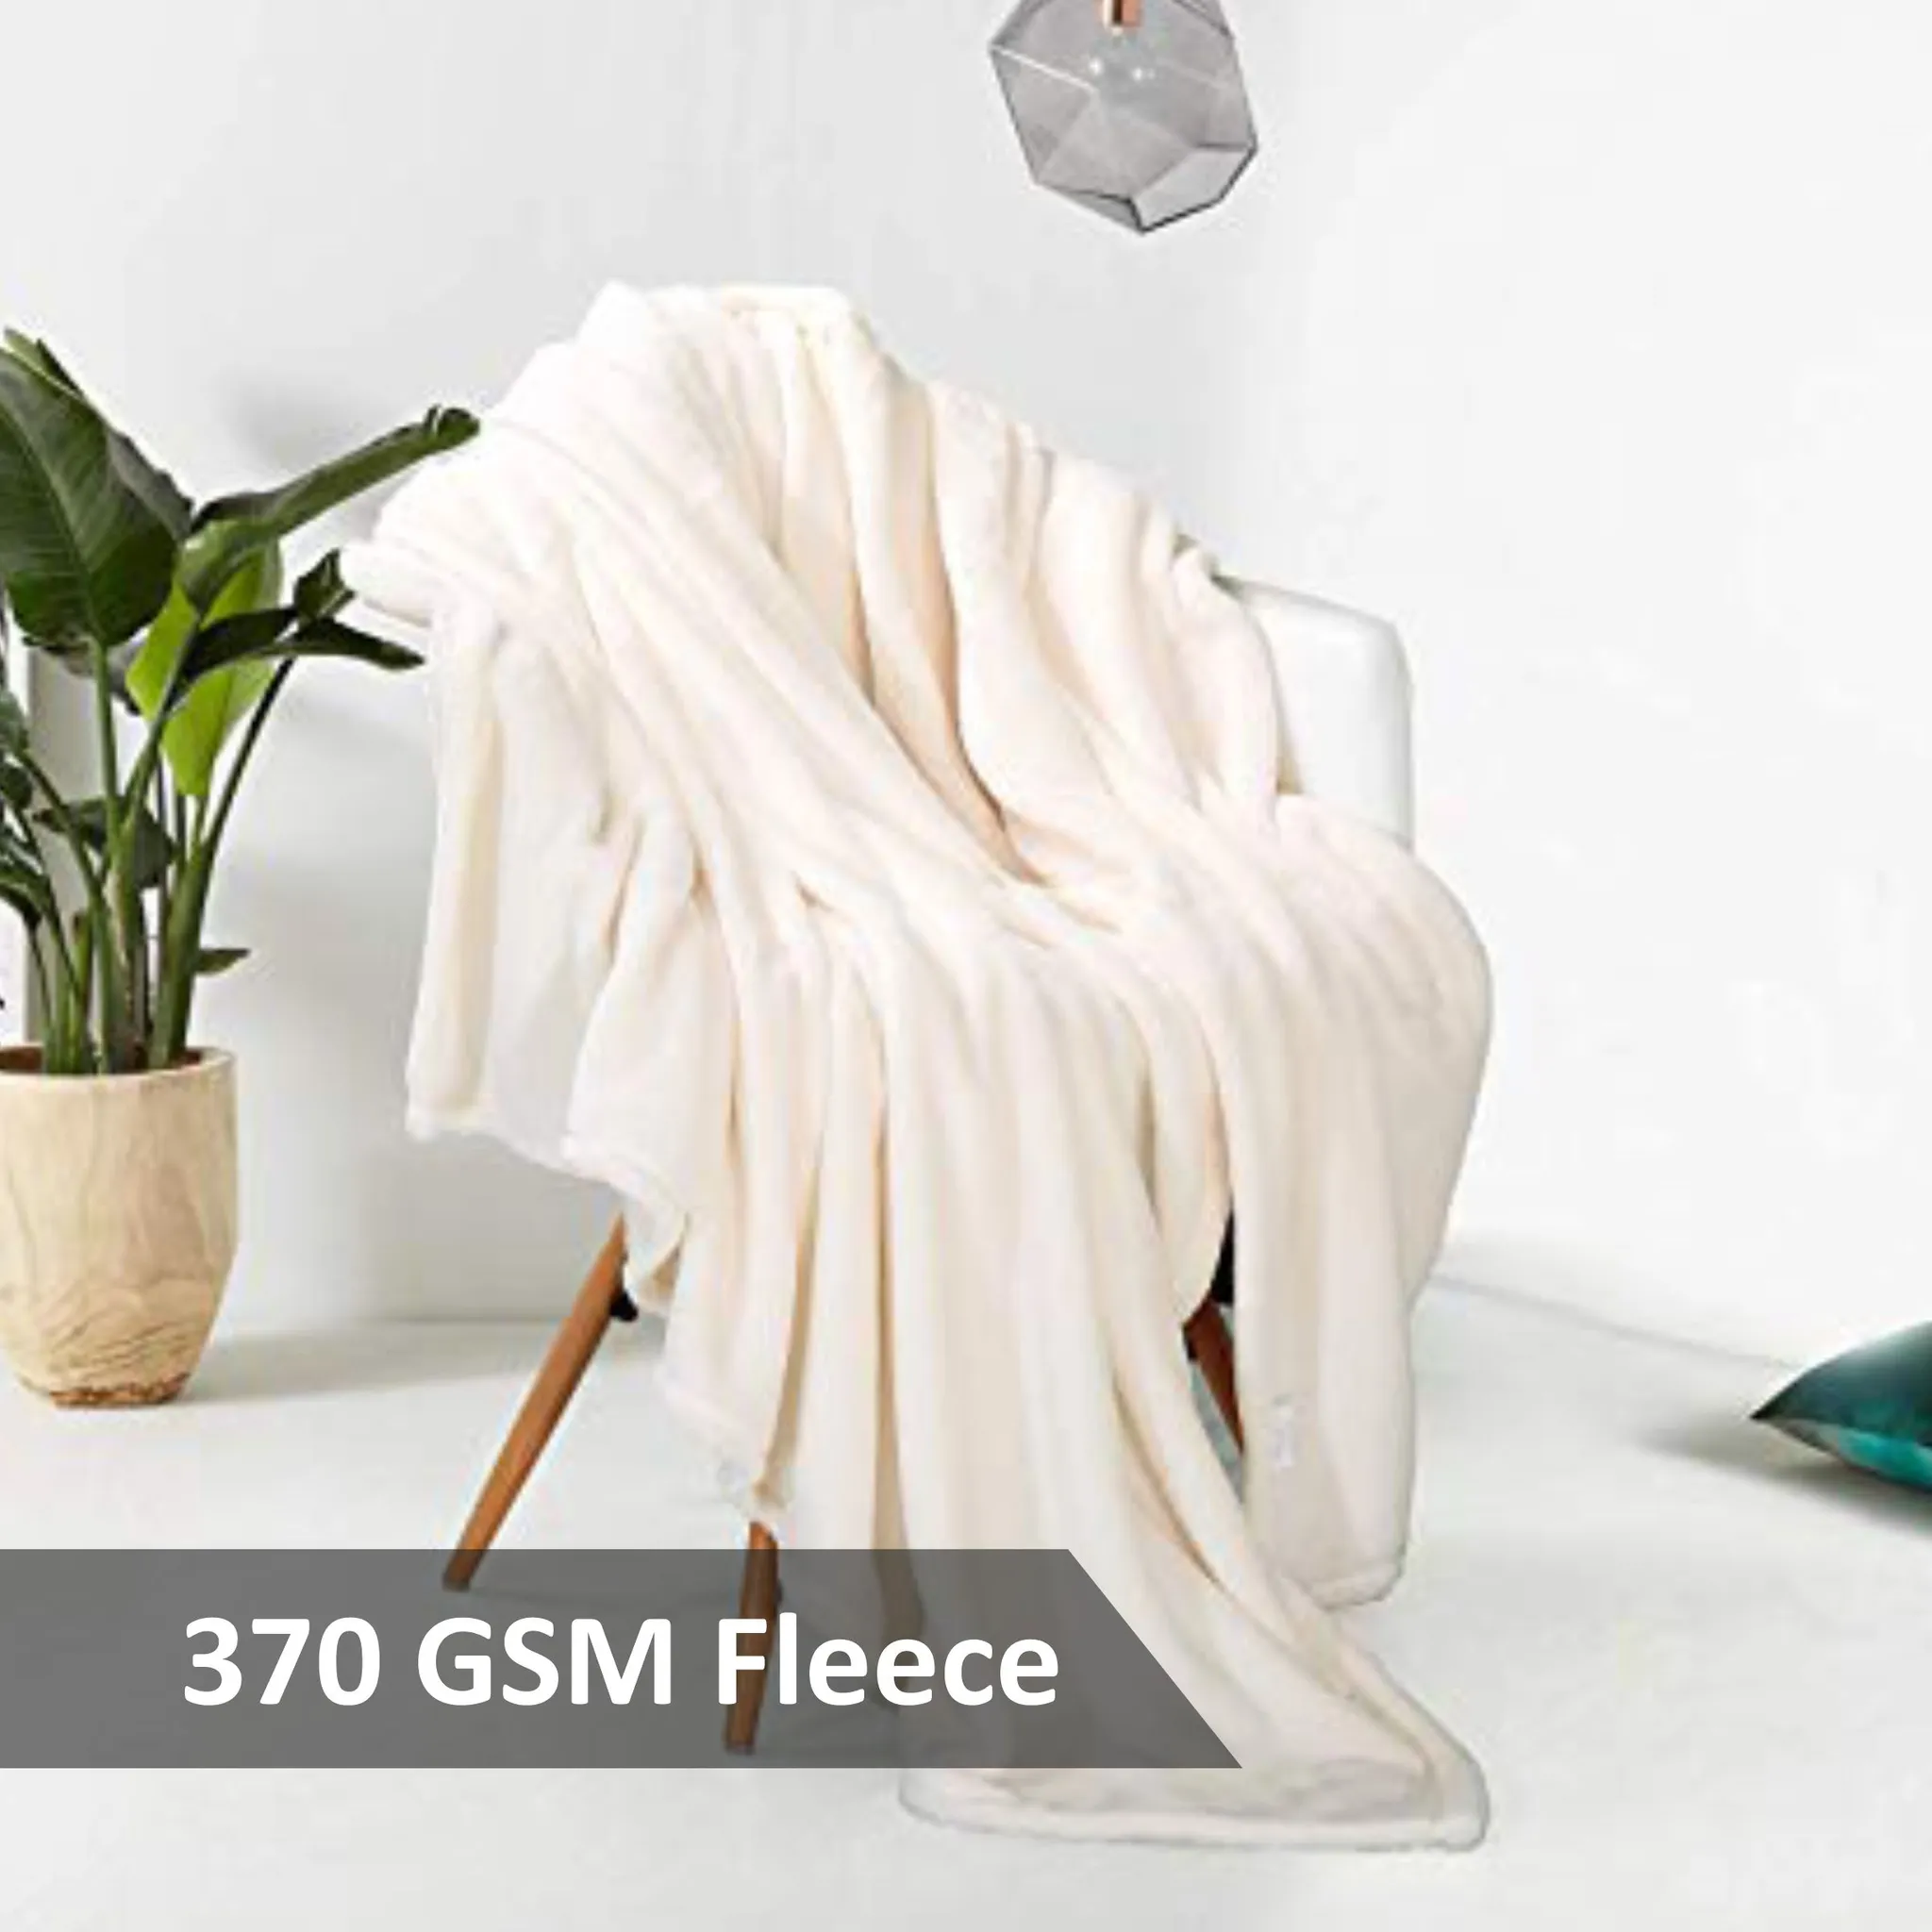 Soft Flannel Fleece Blanket King Ivory